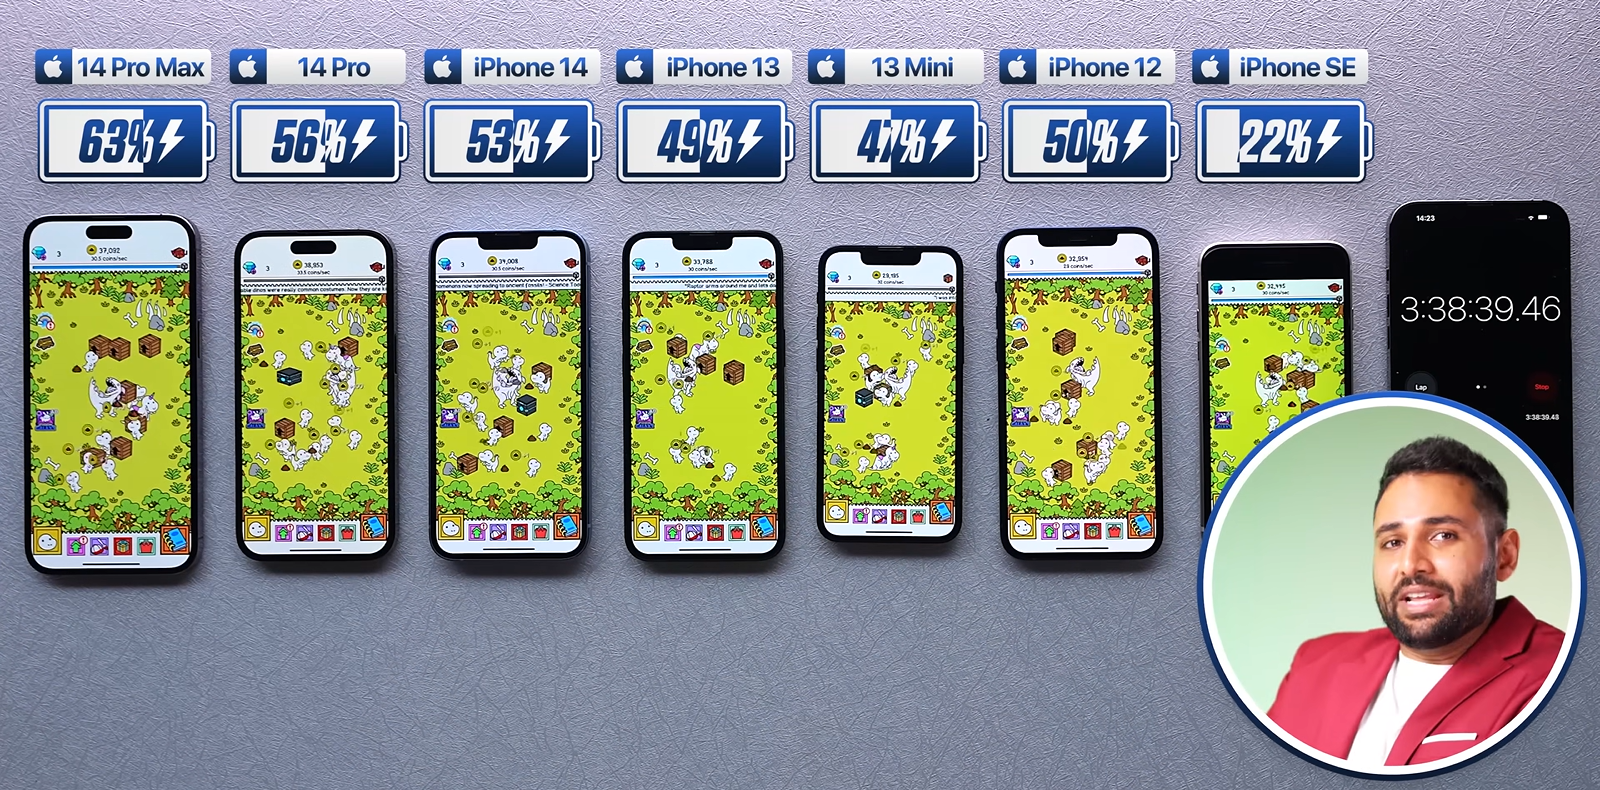 Сравнение 12 мини и 13 мини. Модели айфонов. Айфоны по размерам. Iphone 14 Pro Max. Айфон 13 расцветки.